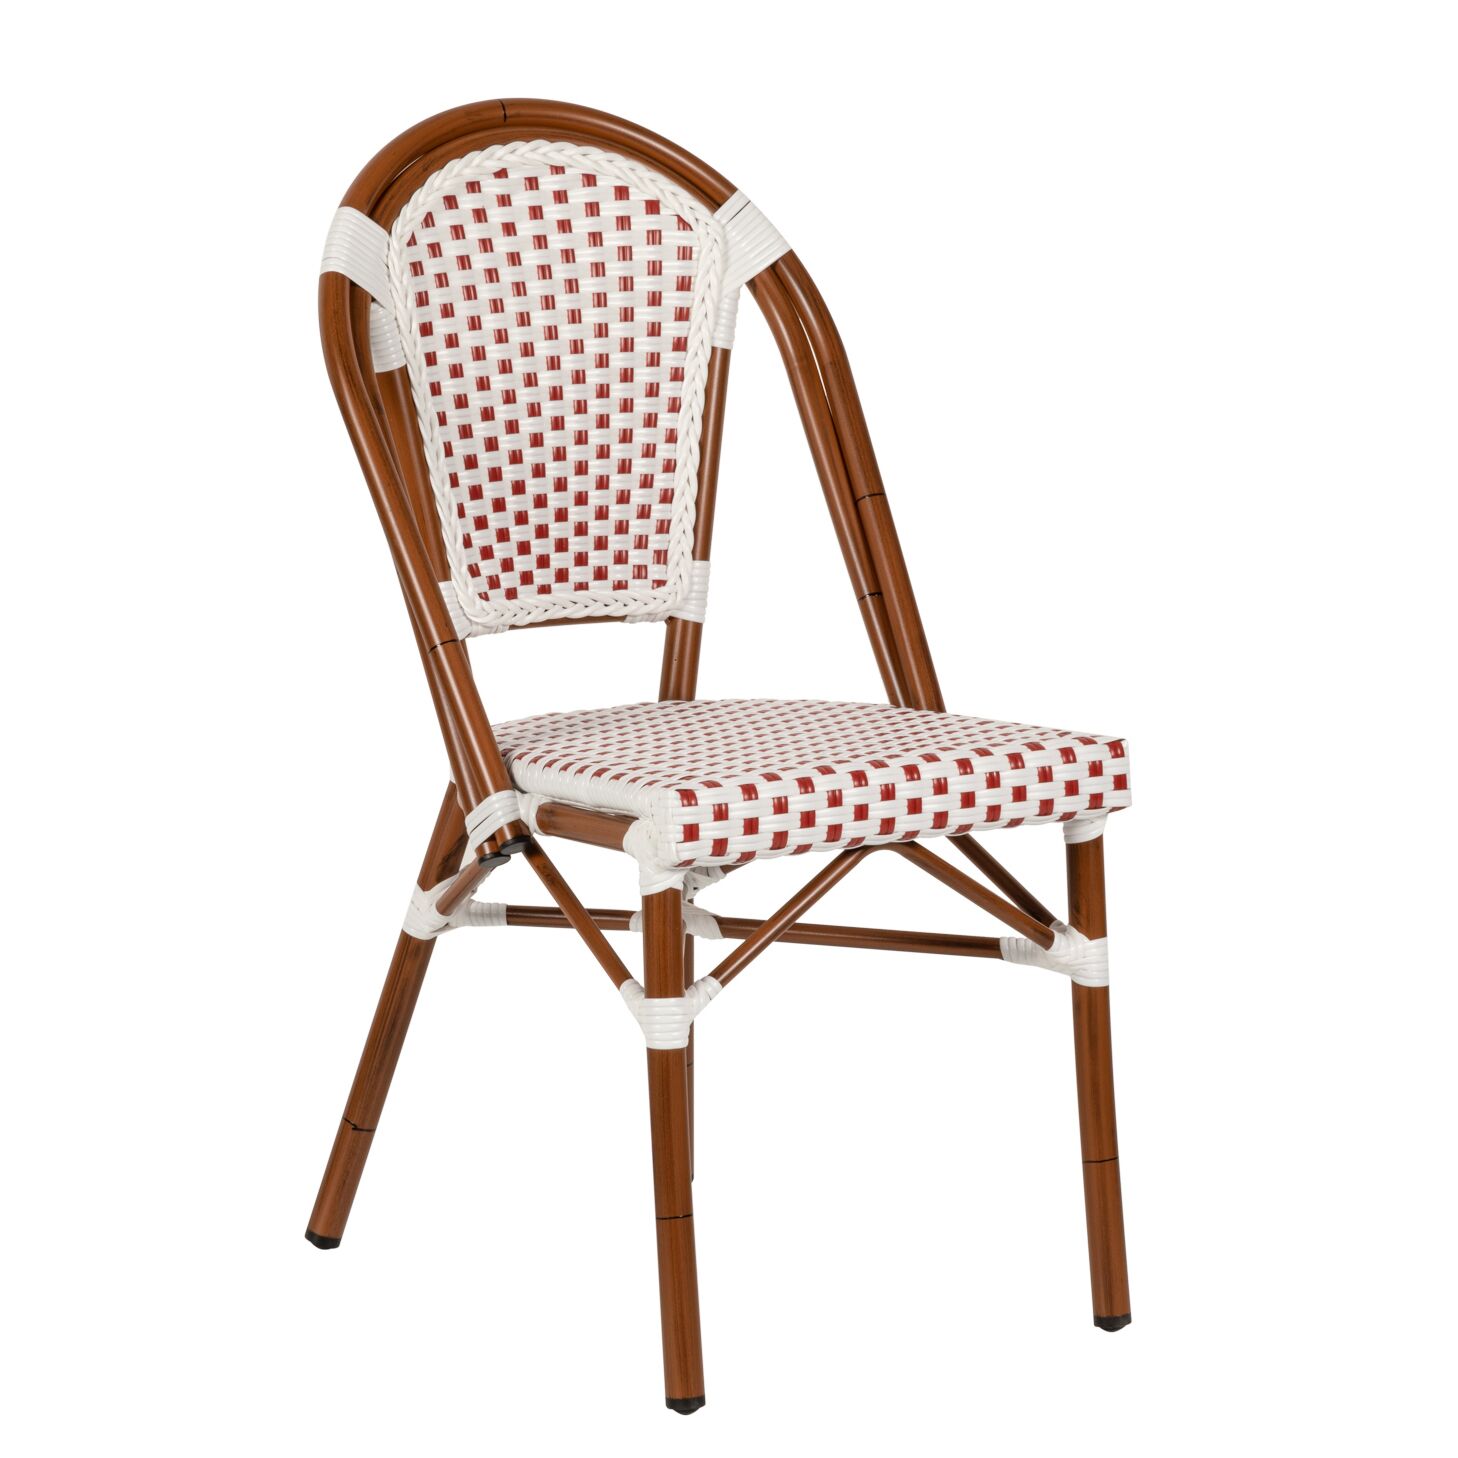 14840059karekla Mutarazi Garden Chair White/red/bamboo Aluminum/rattan 50x57x85cm ready for delivery